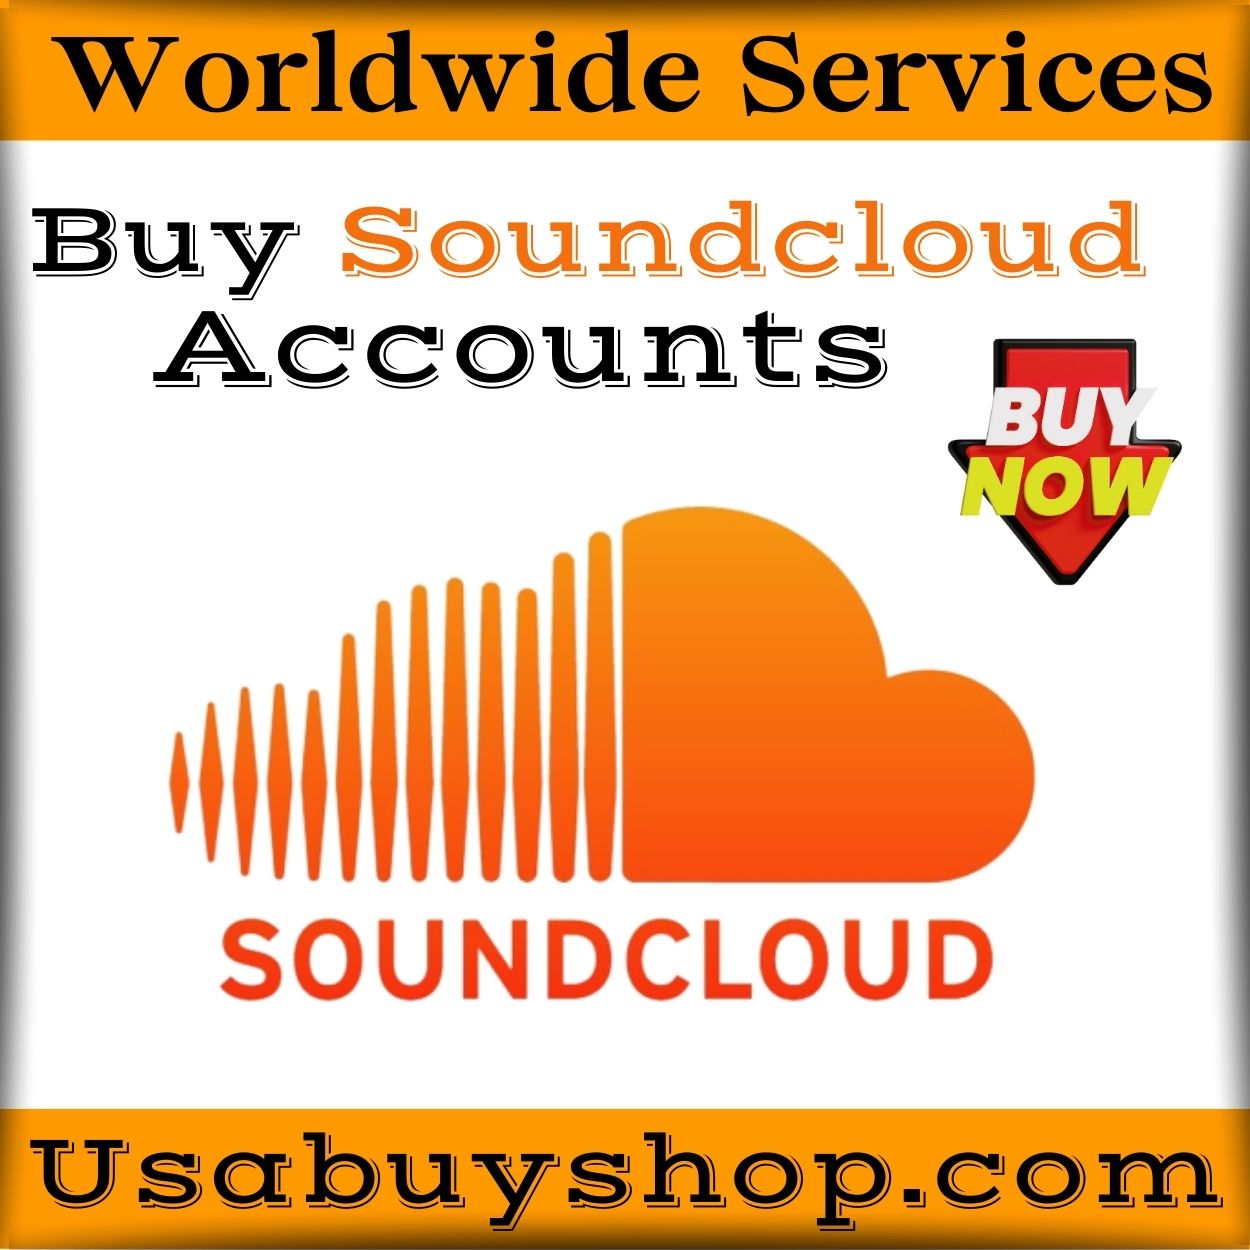 Buy Soundcloud Accounts - 100% Old Gmail Verified Accounts